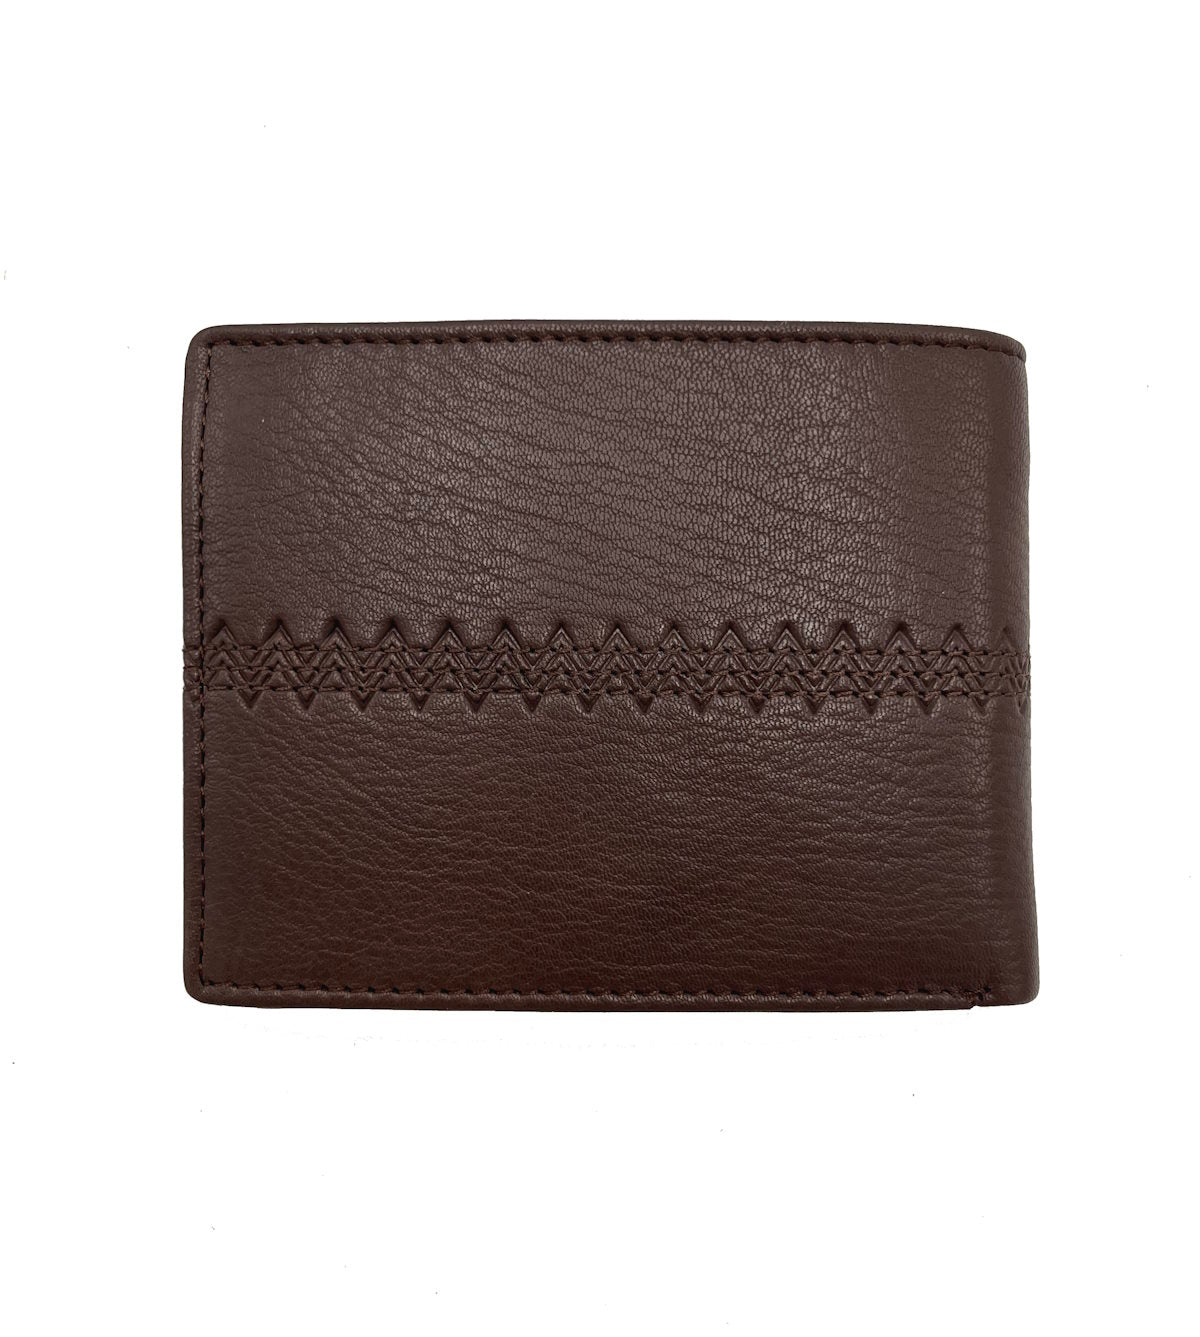 Genuine leather Wallet, Brand EC COVERI, art. EC23763-06